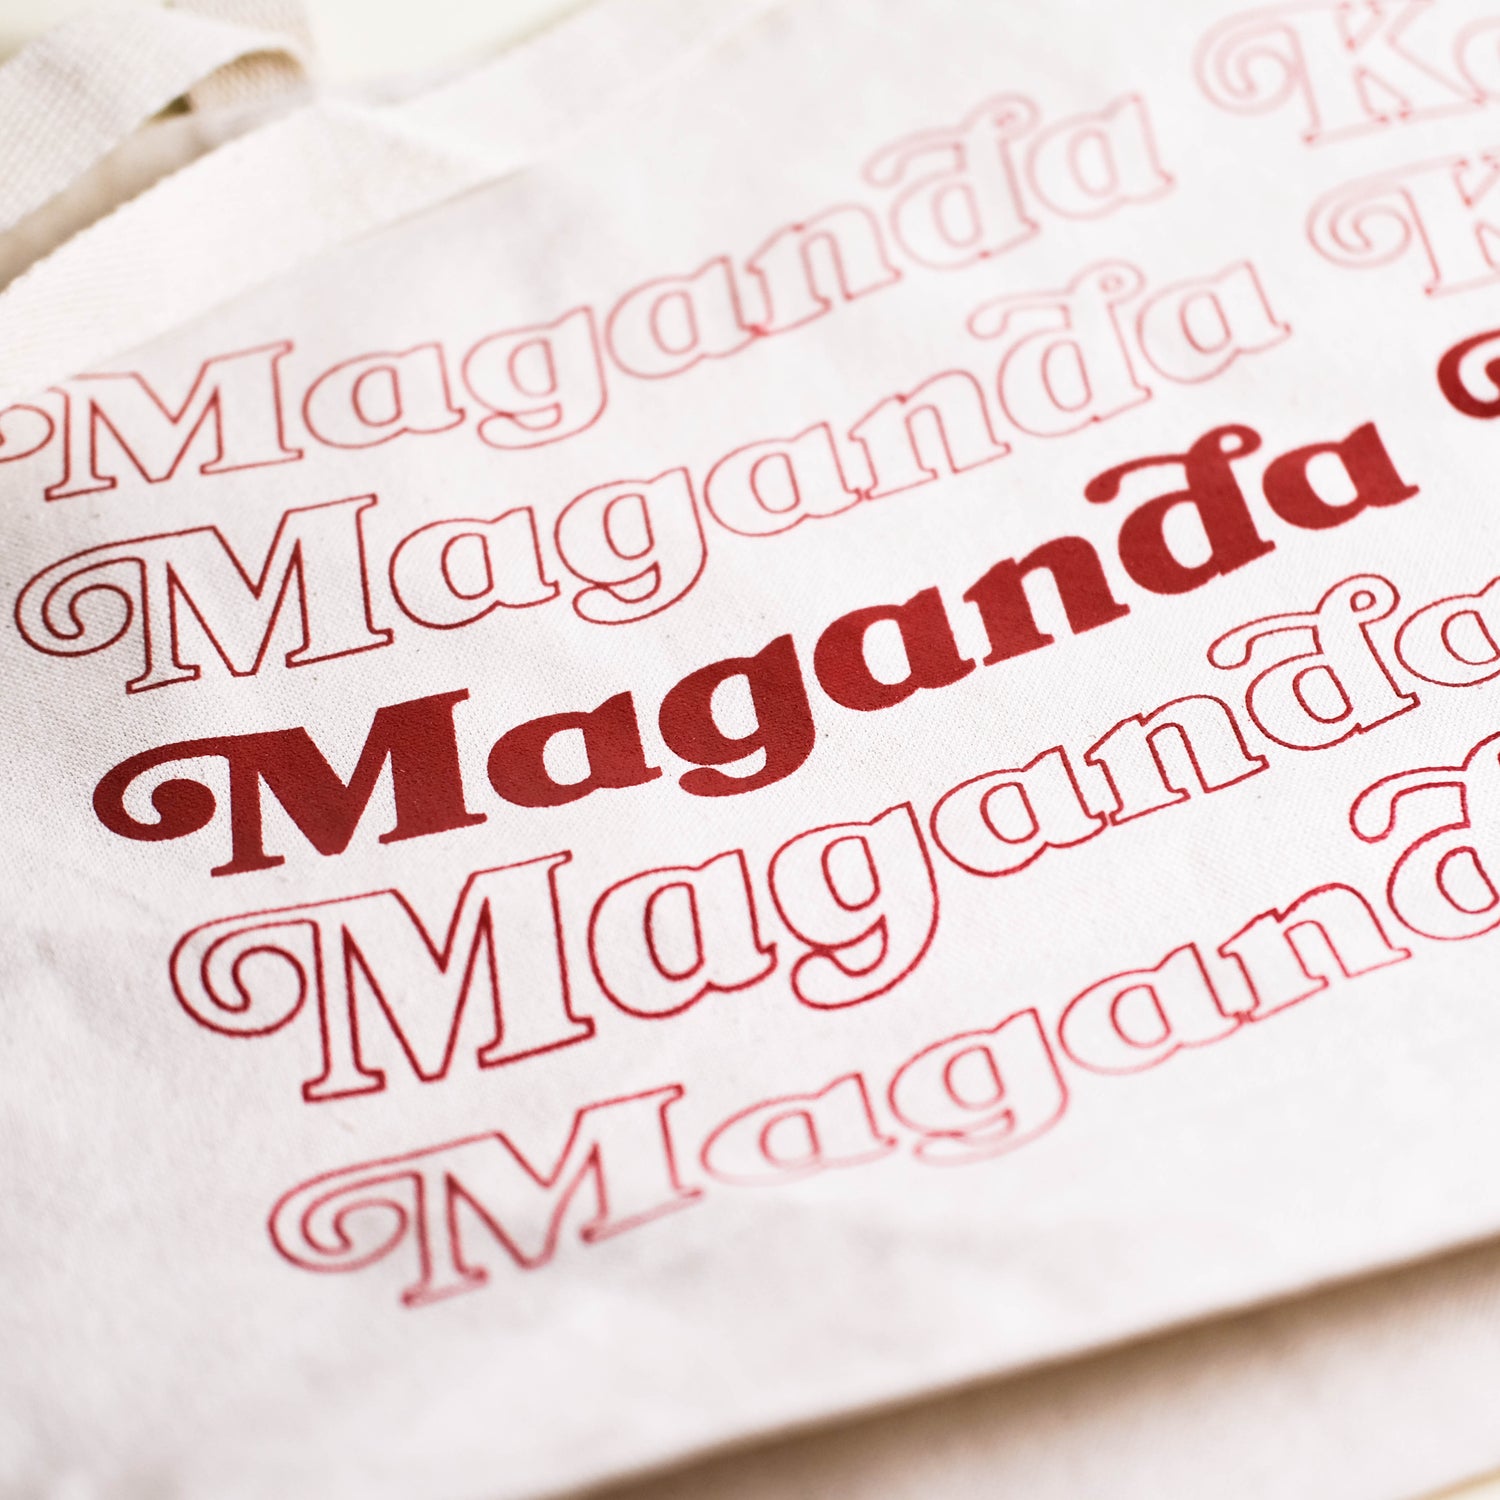 Maganda Ka ("You Are Beautiful") Tote Bag